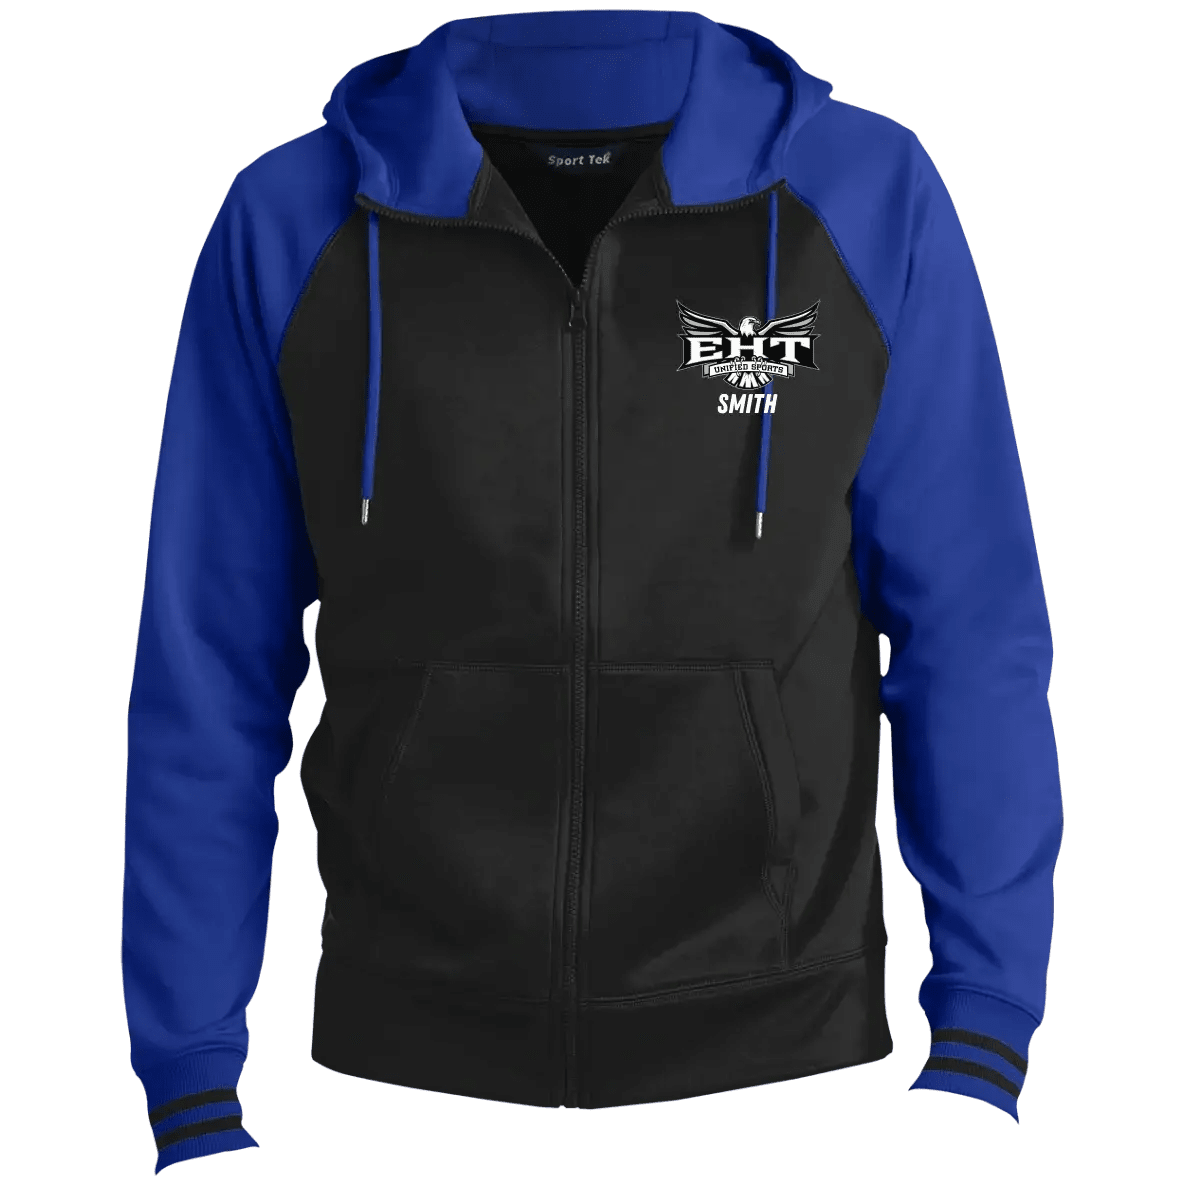 EHT Unified Sports Jackets